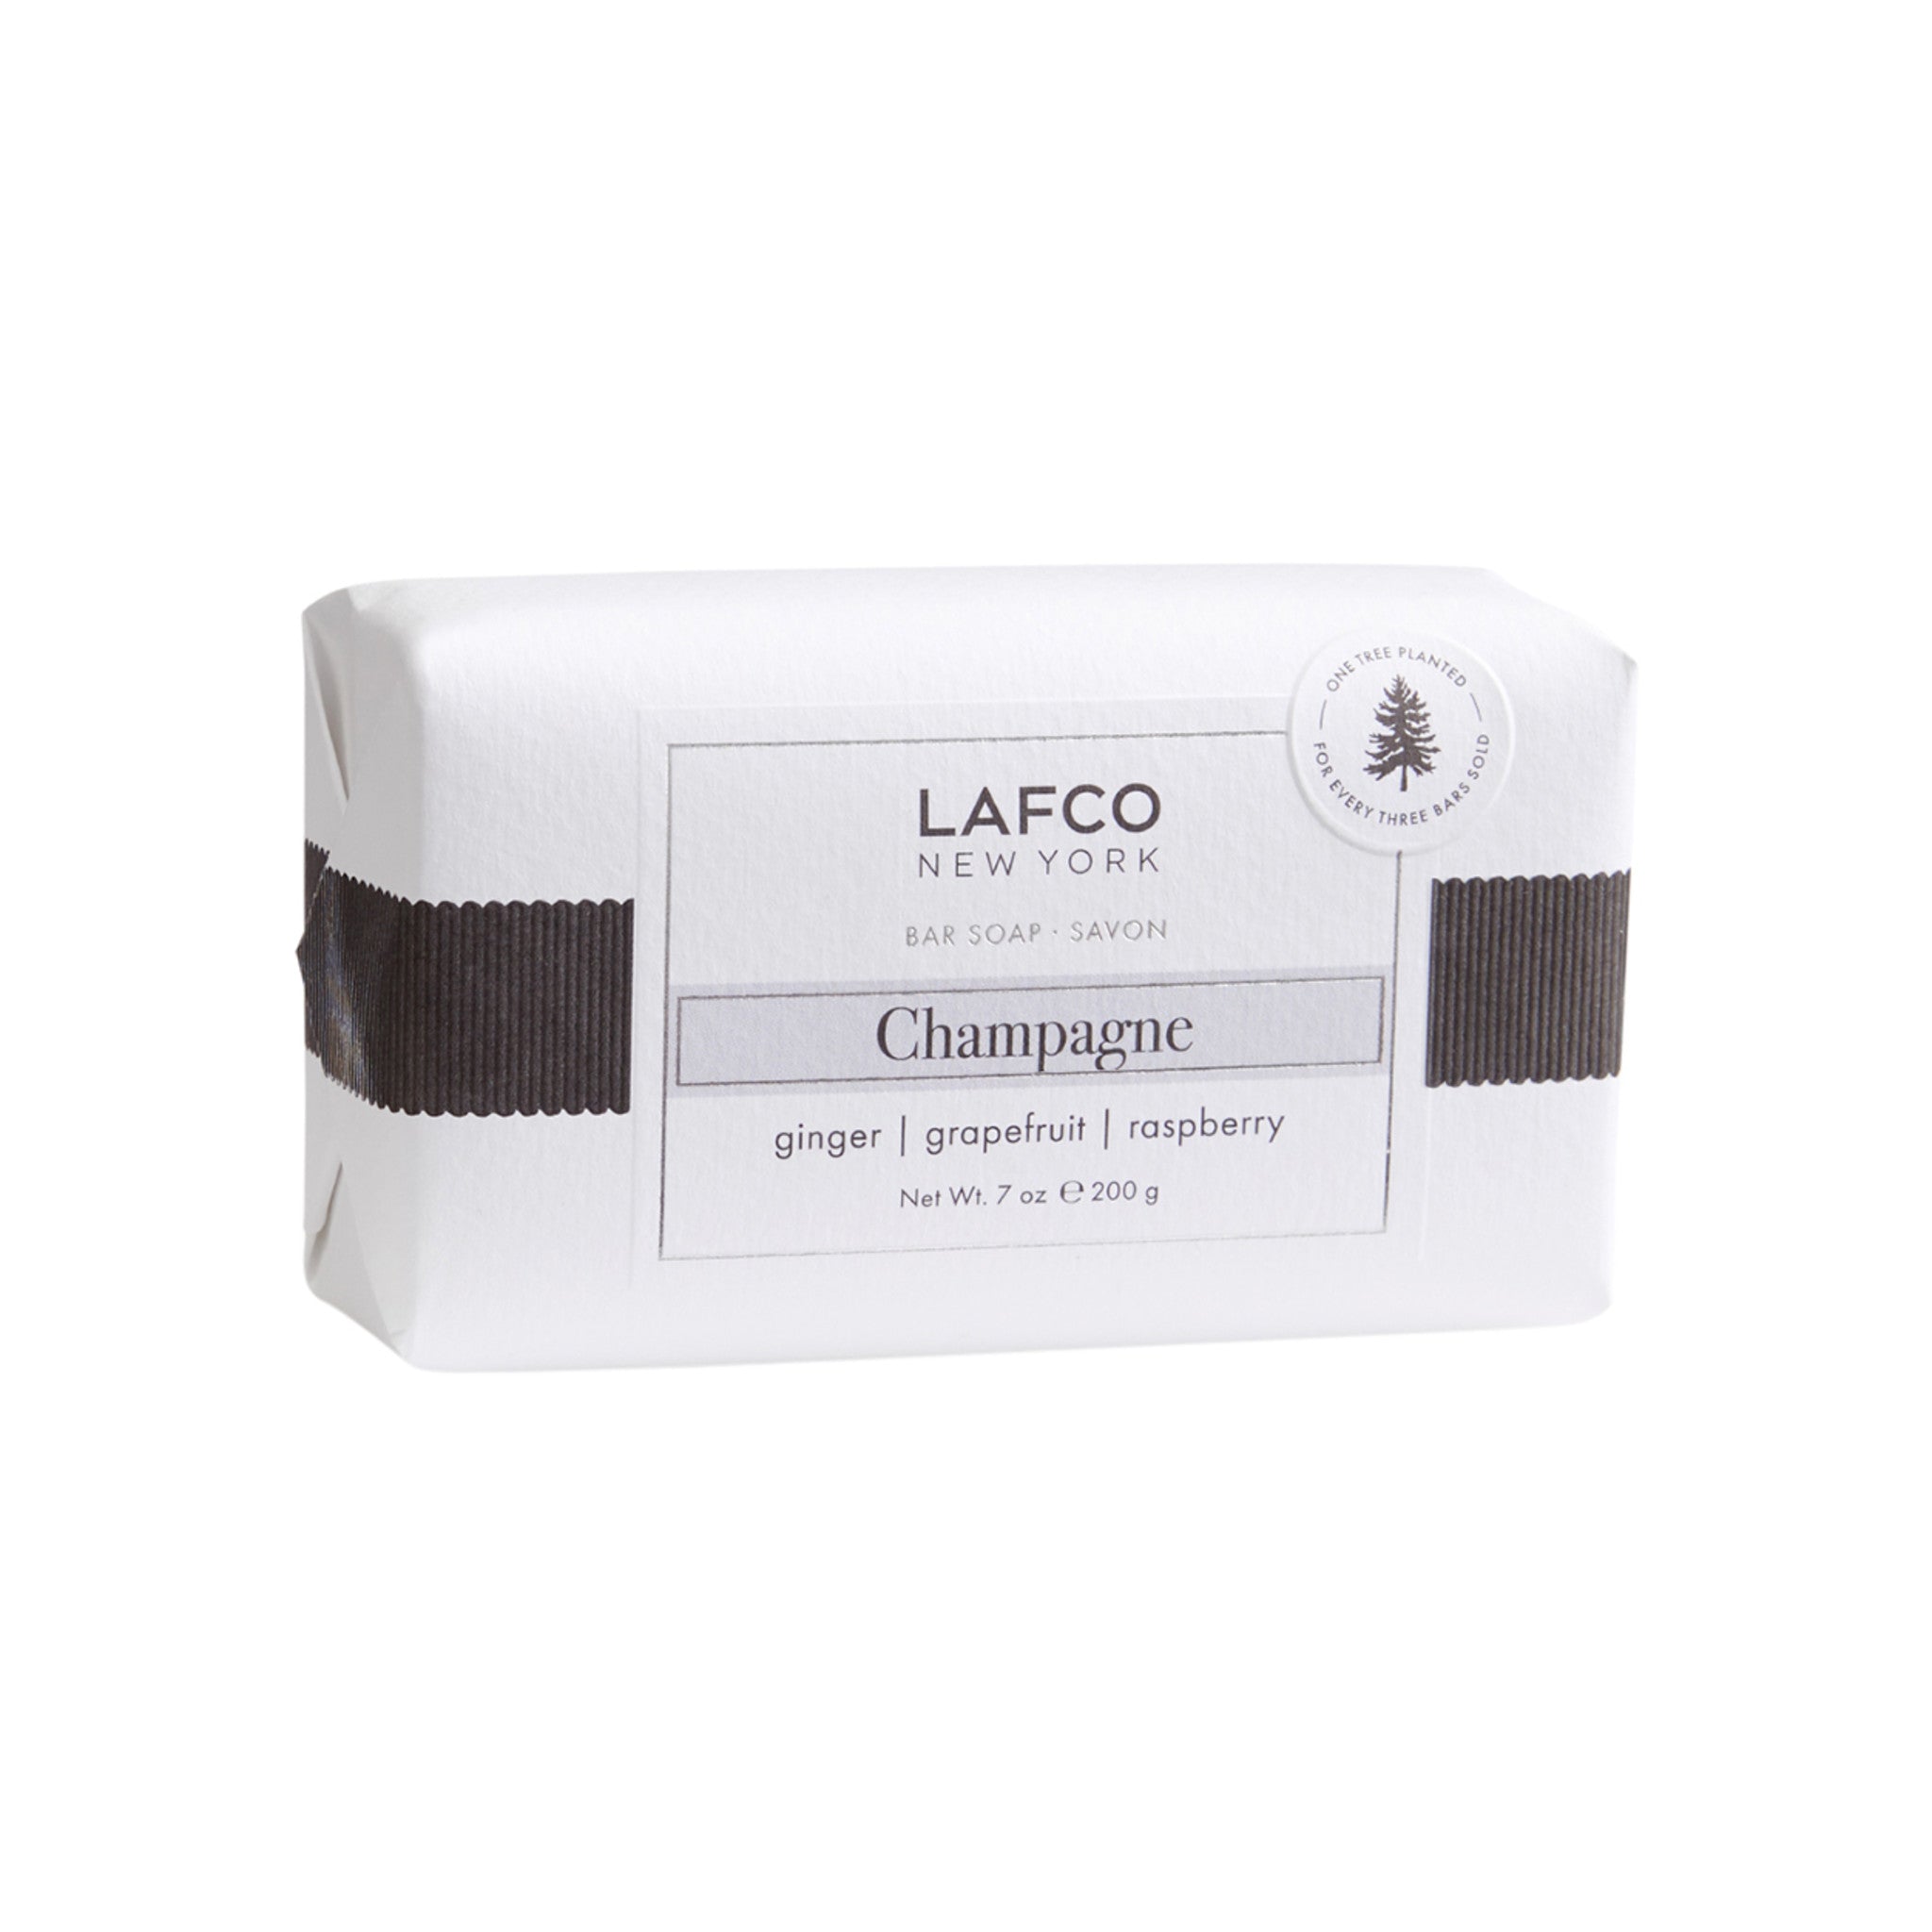 Lafco Champagne Bar Soap main image.